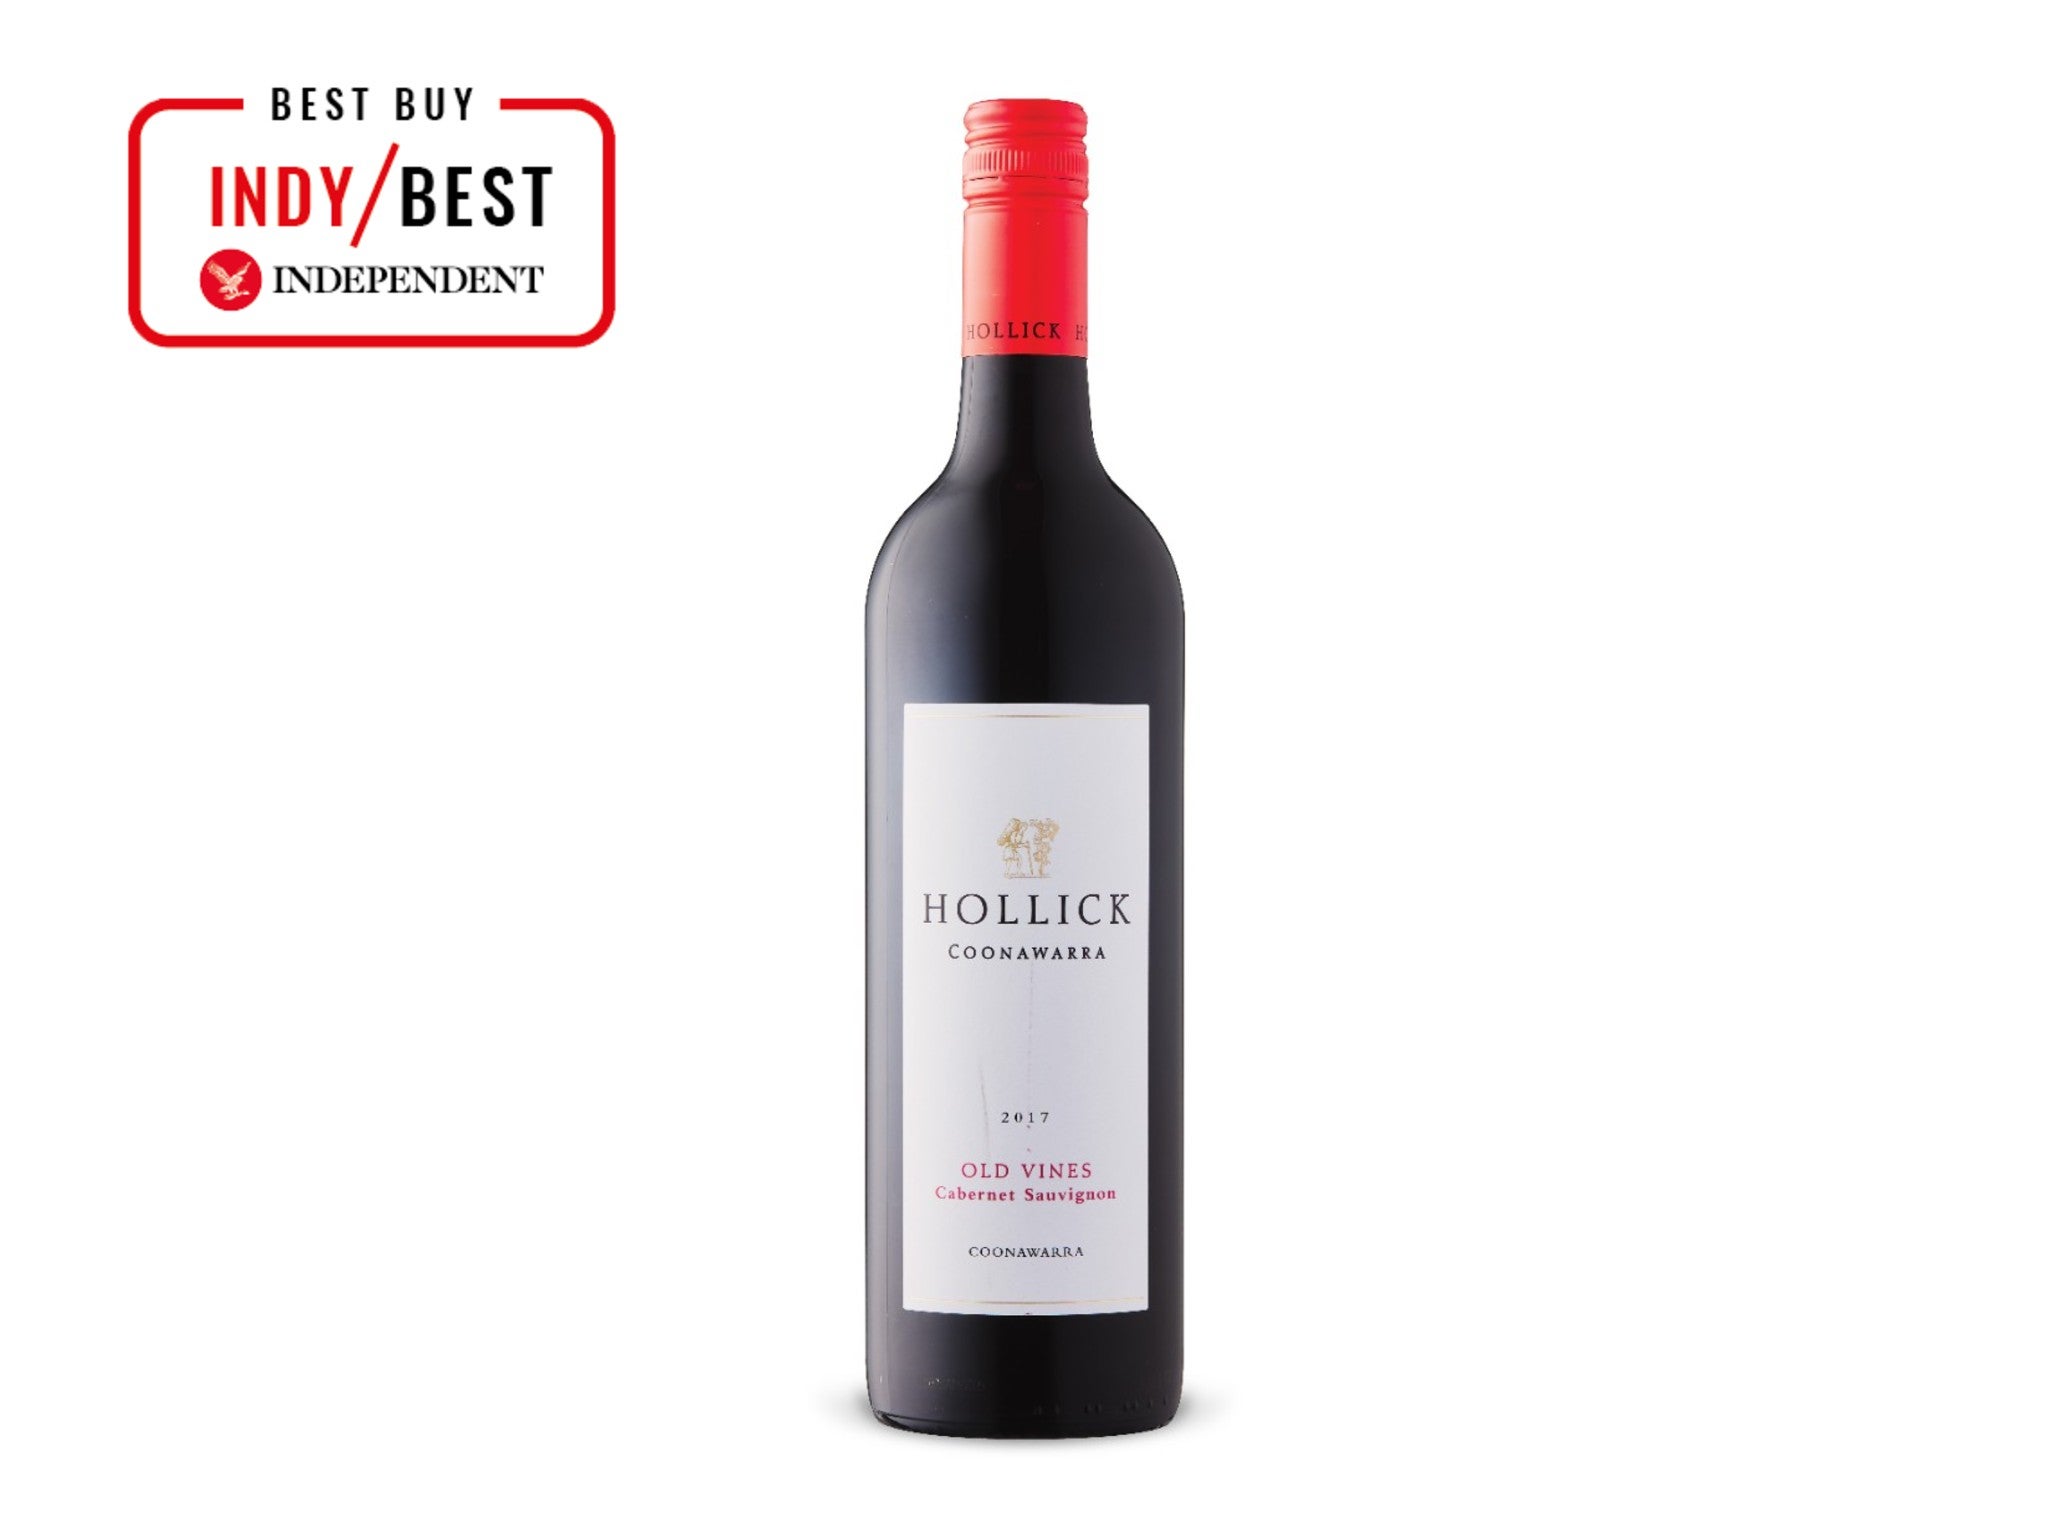 Hollick old vines cabernet sauvignon 2017  indybest.jpeg